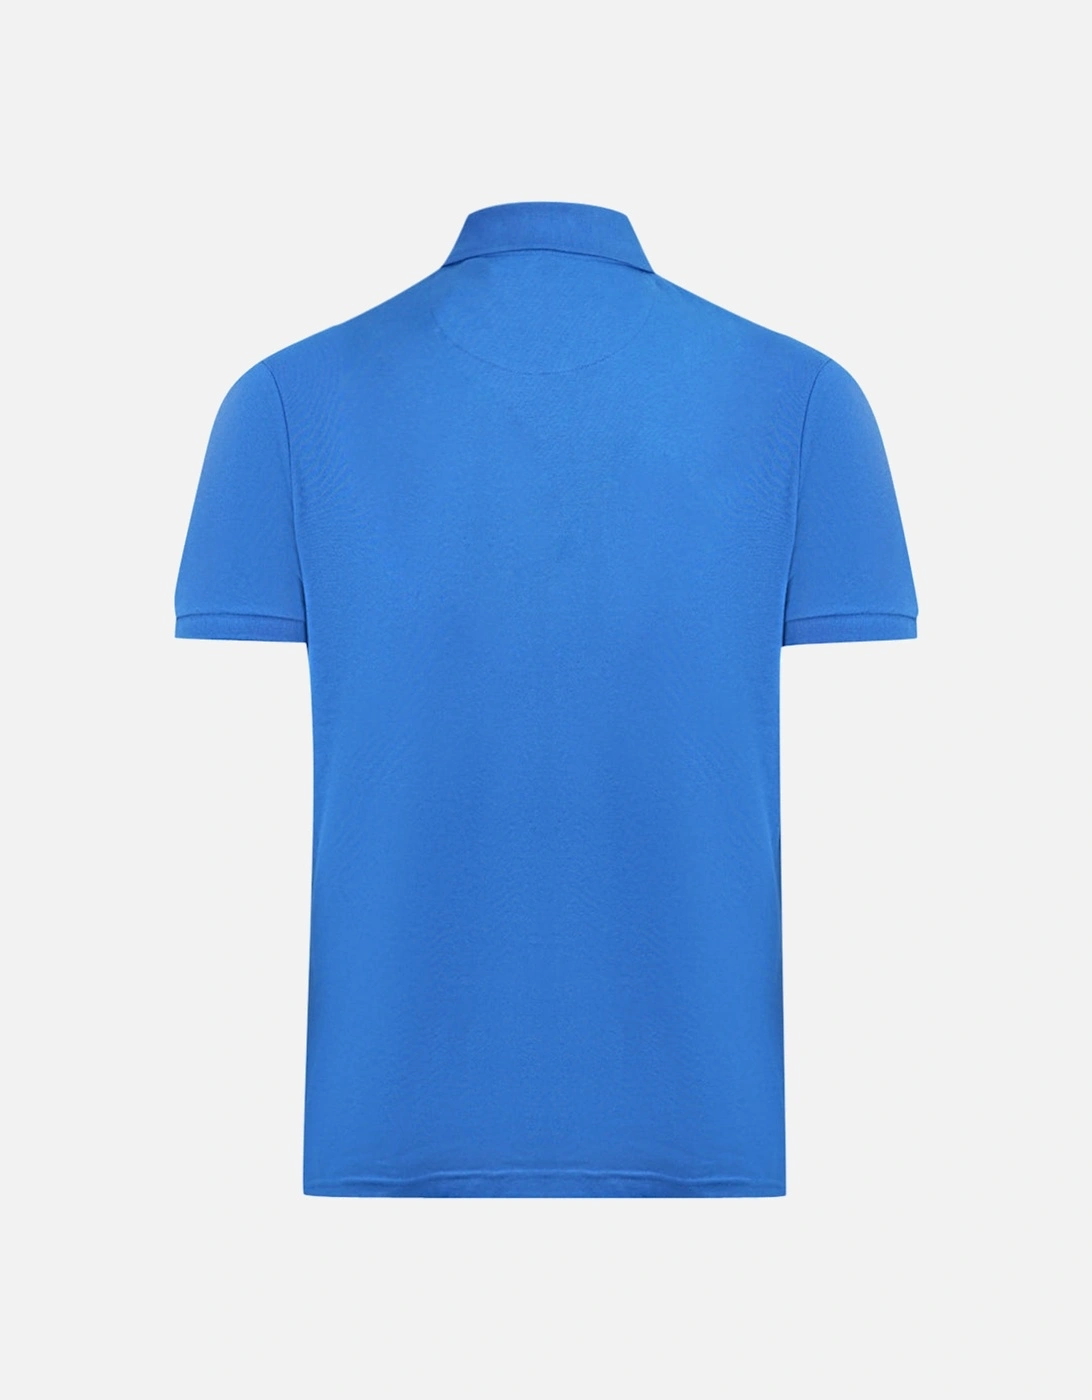 Lyle & Scott Spring Blue Plain Polo Shirt